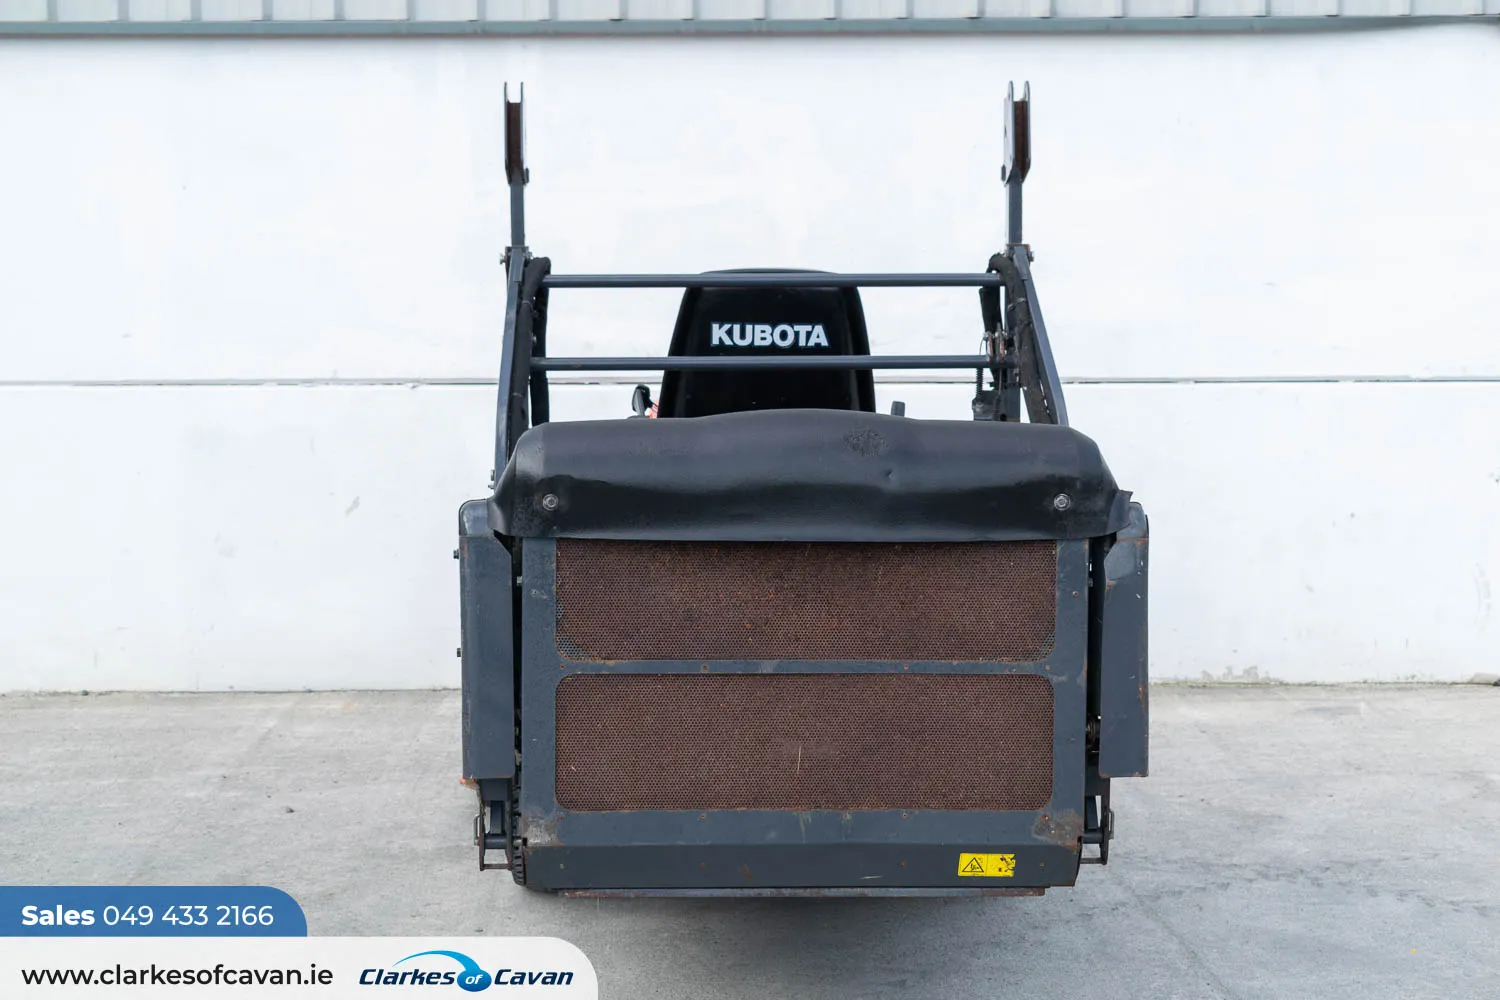 Used 2017 Kubota G21e HD Lawnmower